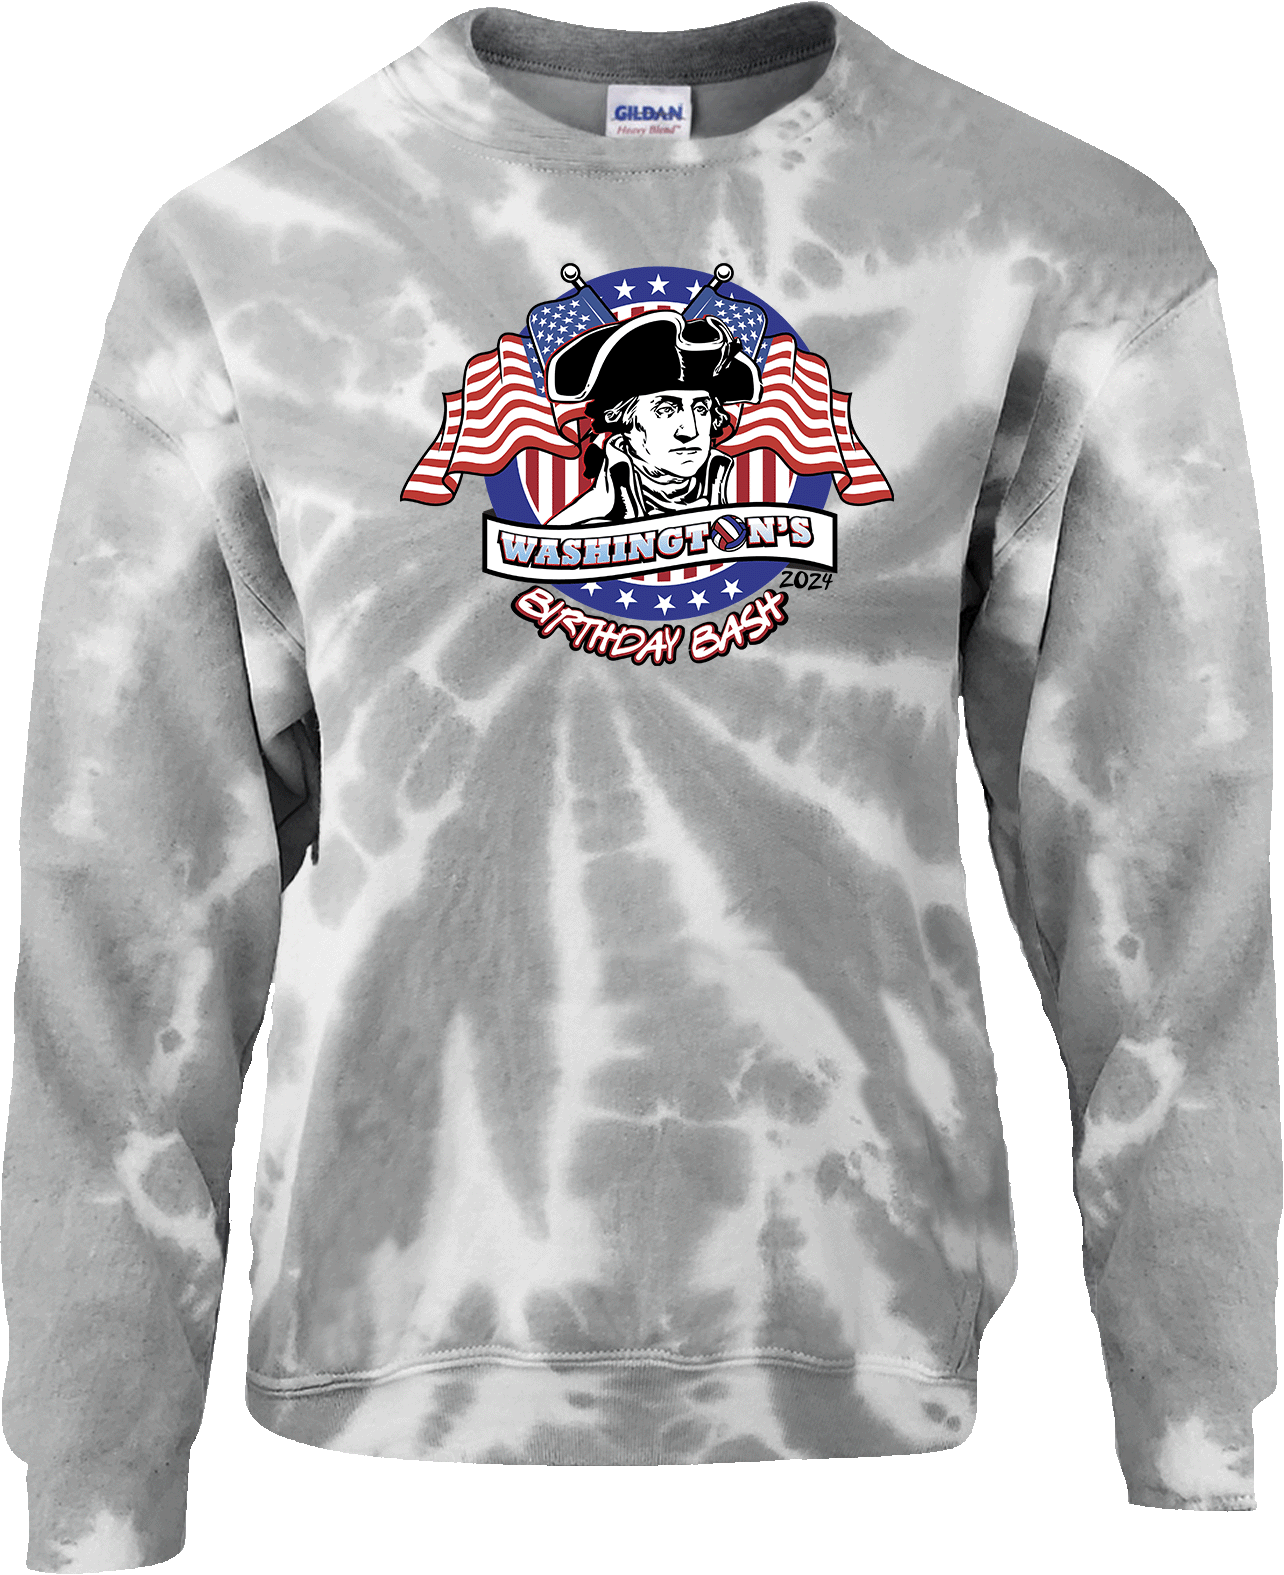 Crew Sweatershirt - 2024 Washington's Birthday Bash